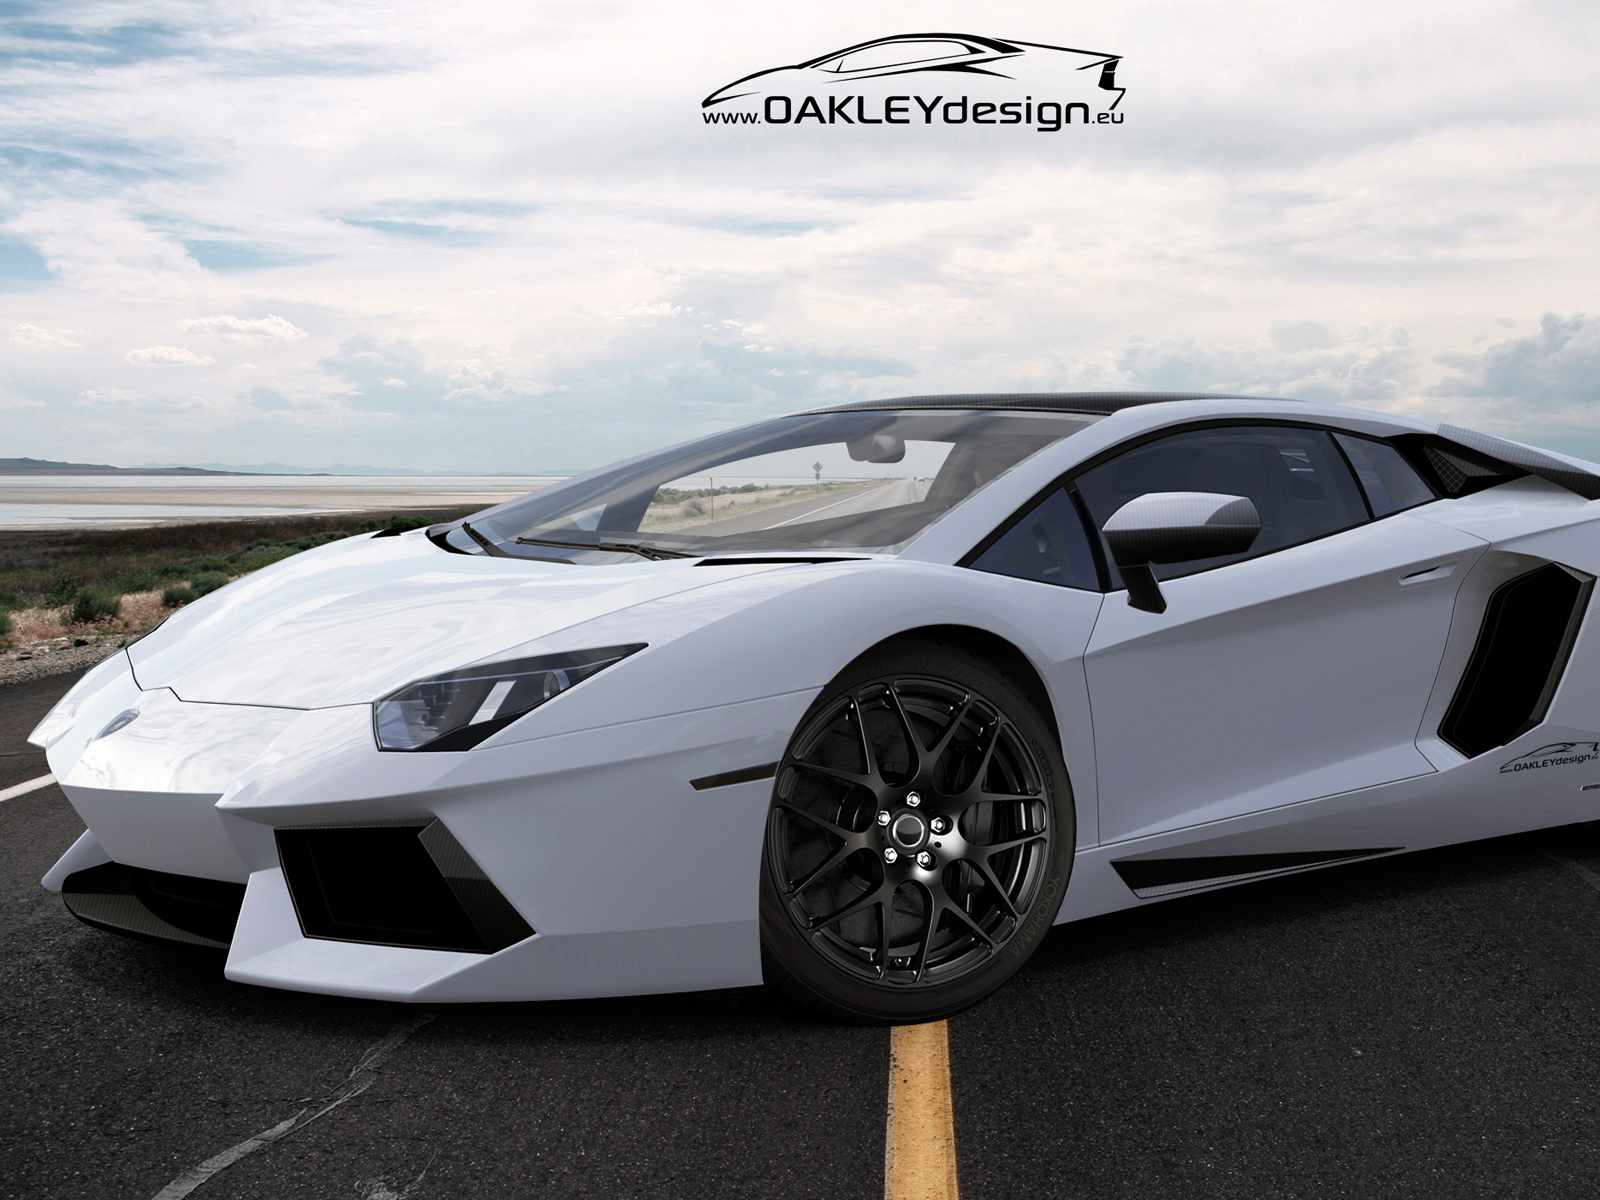 Oakley Design Lamborghini Aventador Wallpaper HD